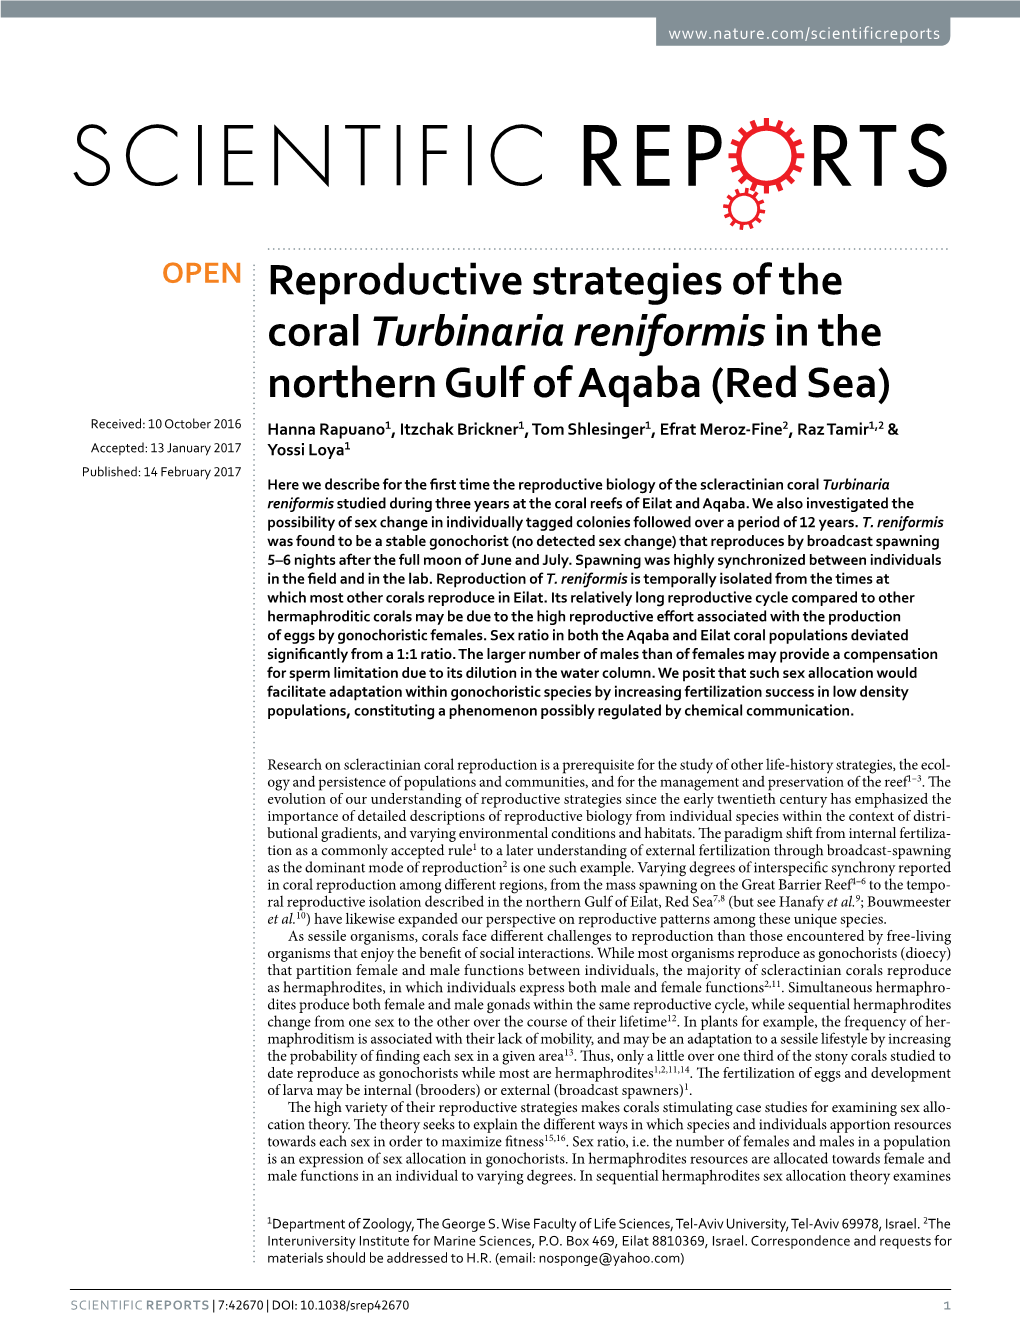 Reproductive Strategies of the Coral Turbinaria Reniformisin the Northern